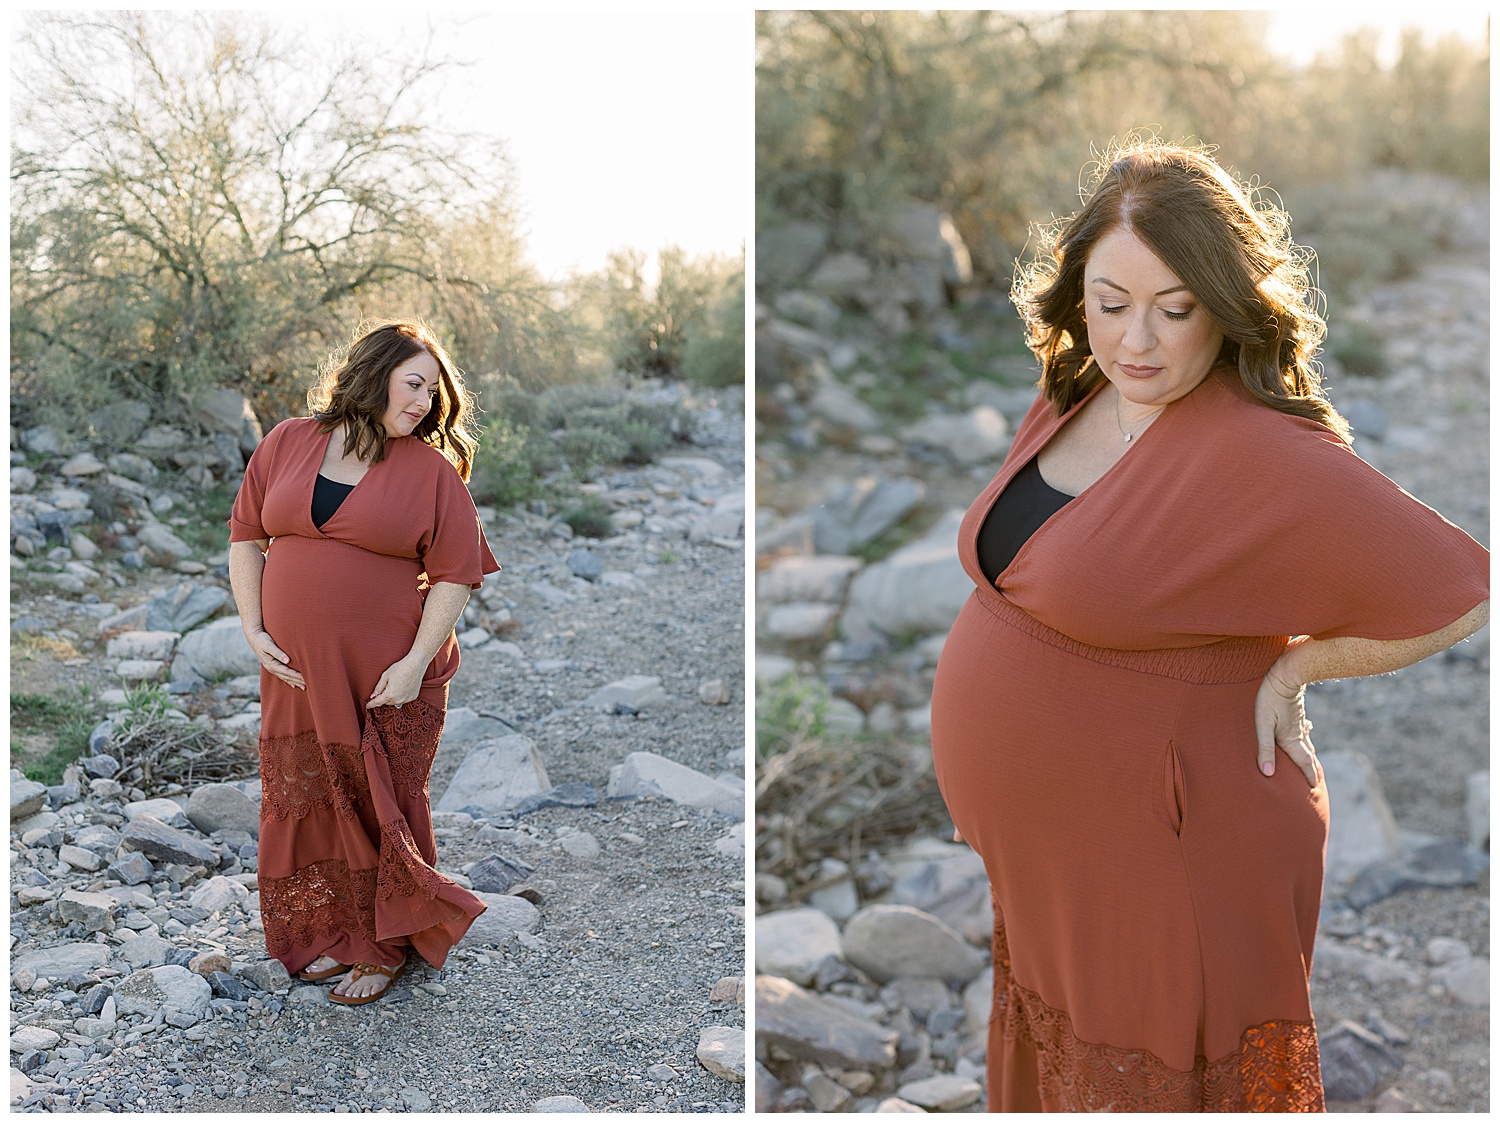 Scottsdale Arizona Maternity Session in the Desert, Arizona Maternity Photos, Rust colored dress